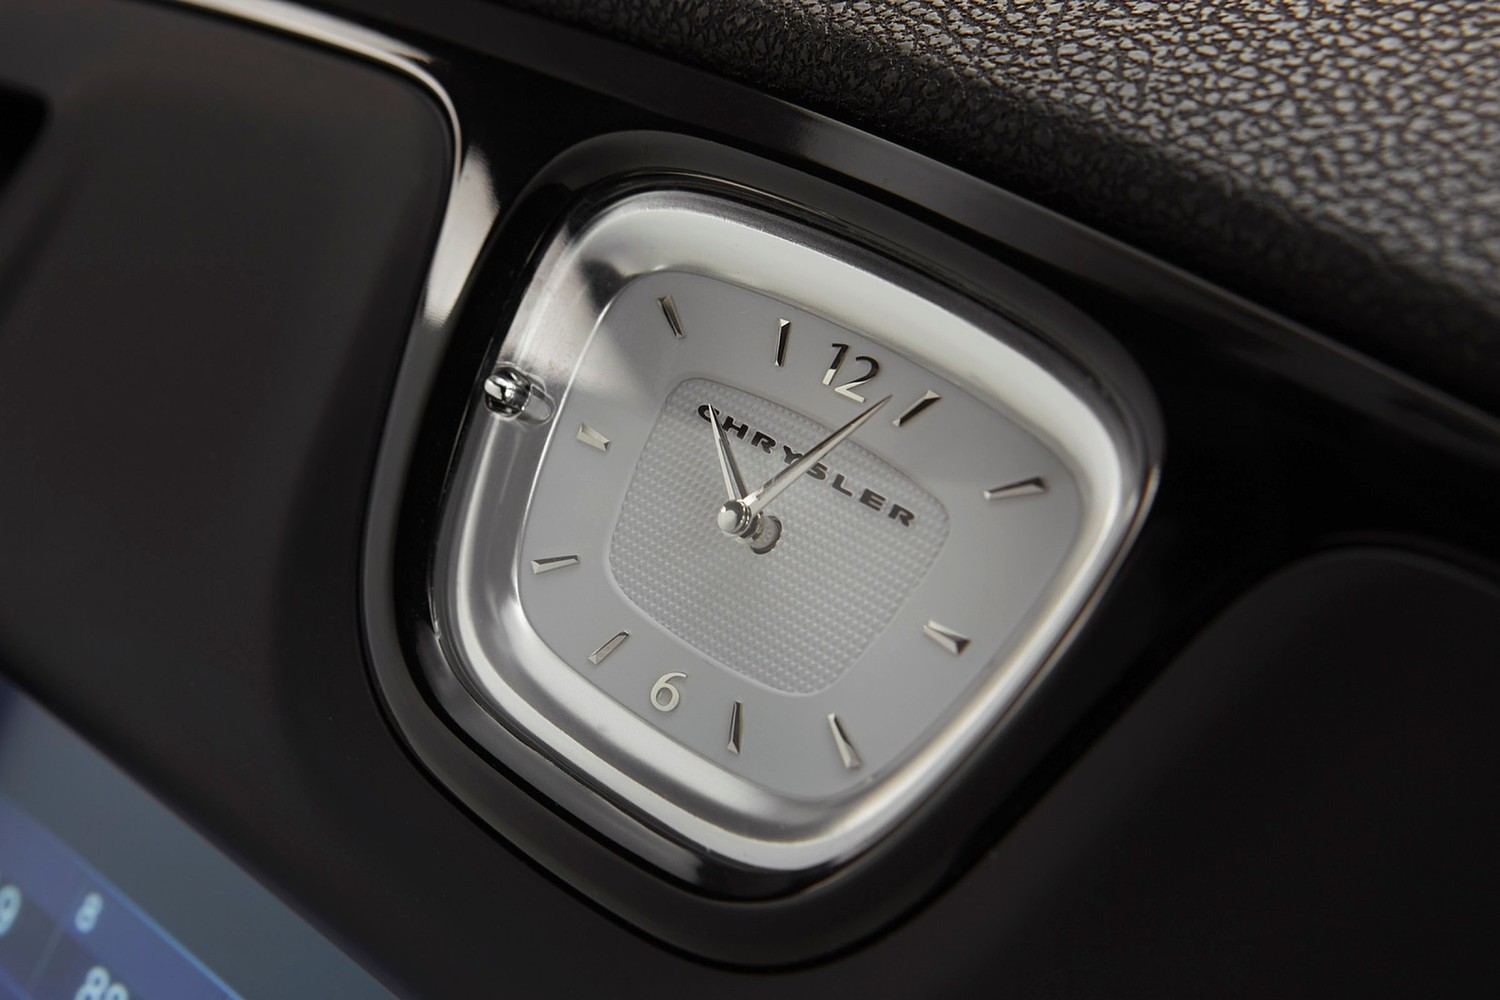 Chrysler 300 S Sedan Analog Clock Detail (2015 model year shown)